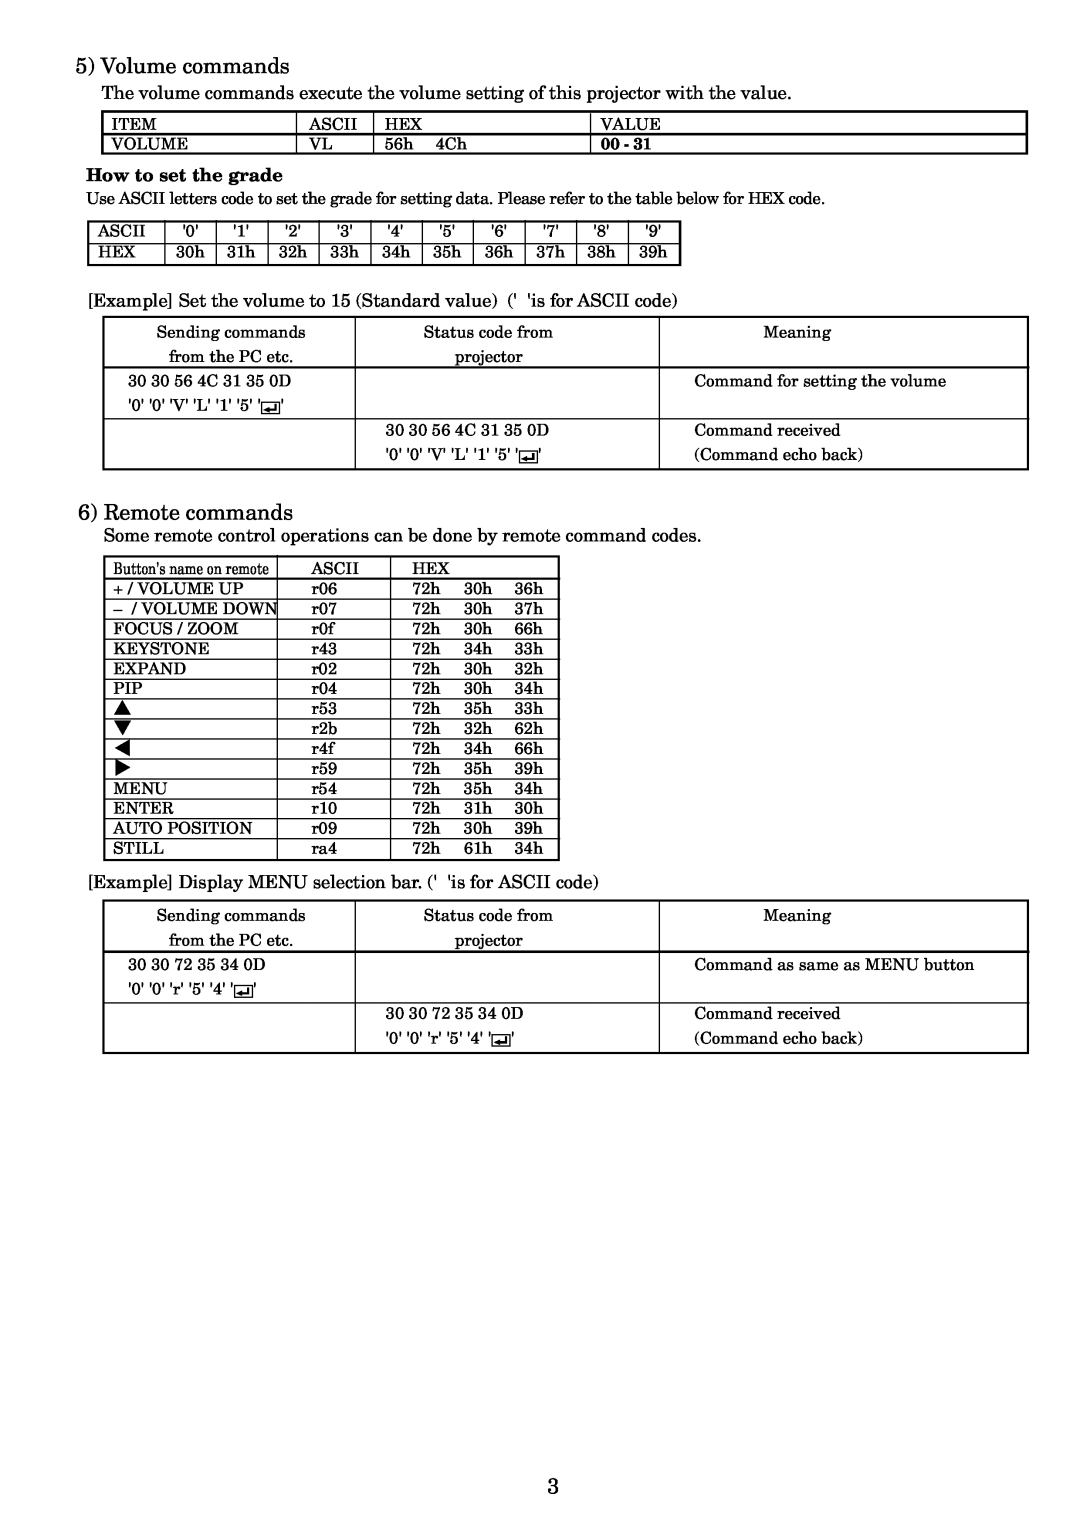 Mitsubishi Electronics LVP-X400BU user manual Volume commands, Remote commands, How to set the grade 